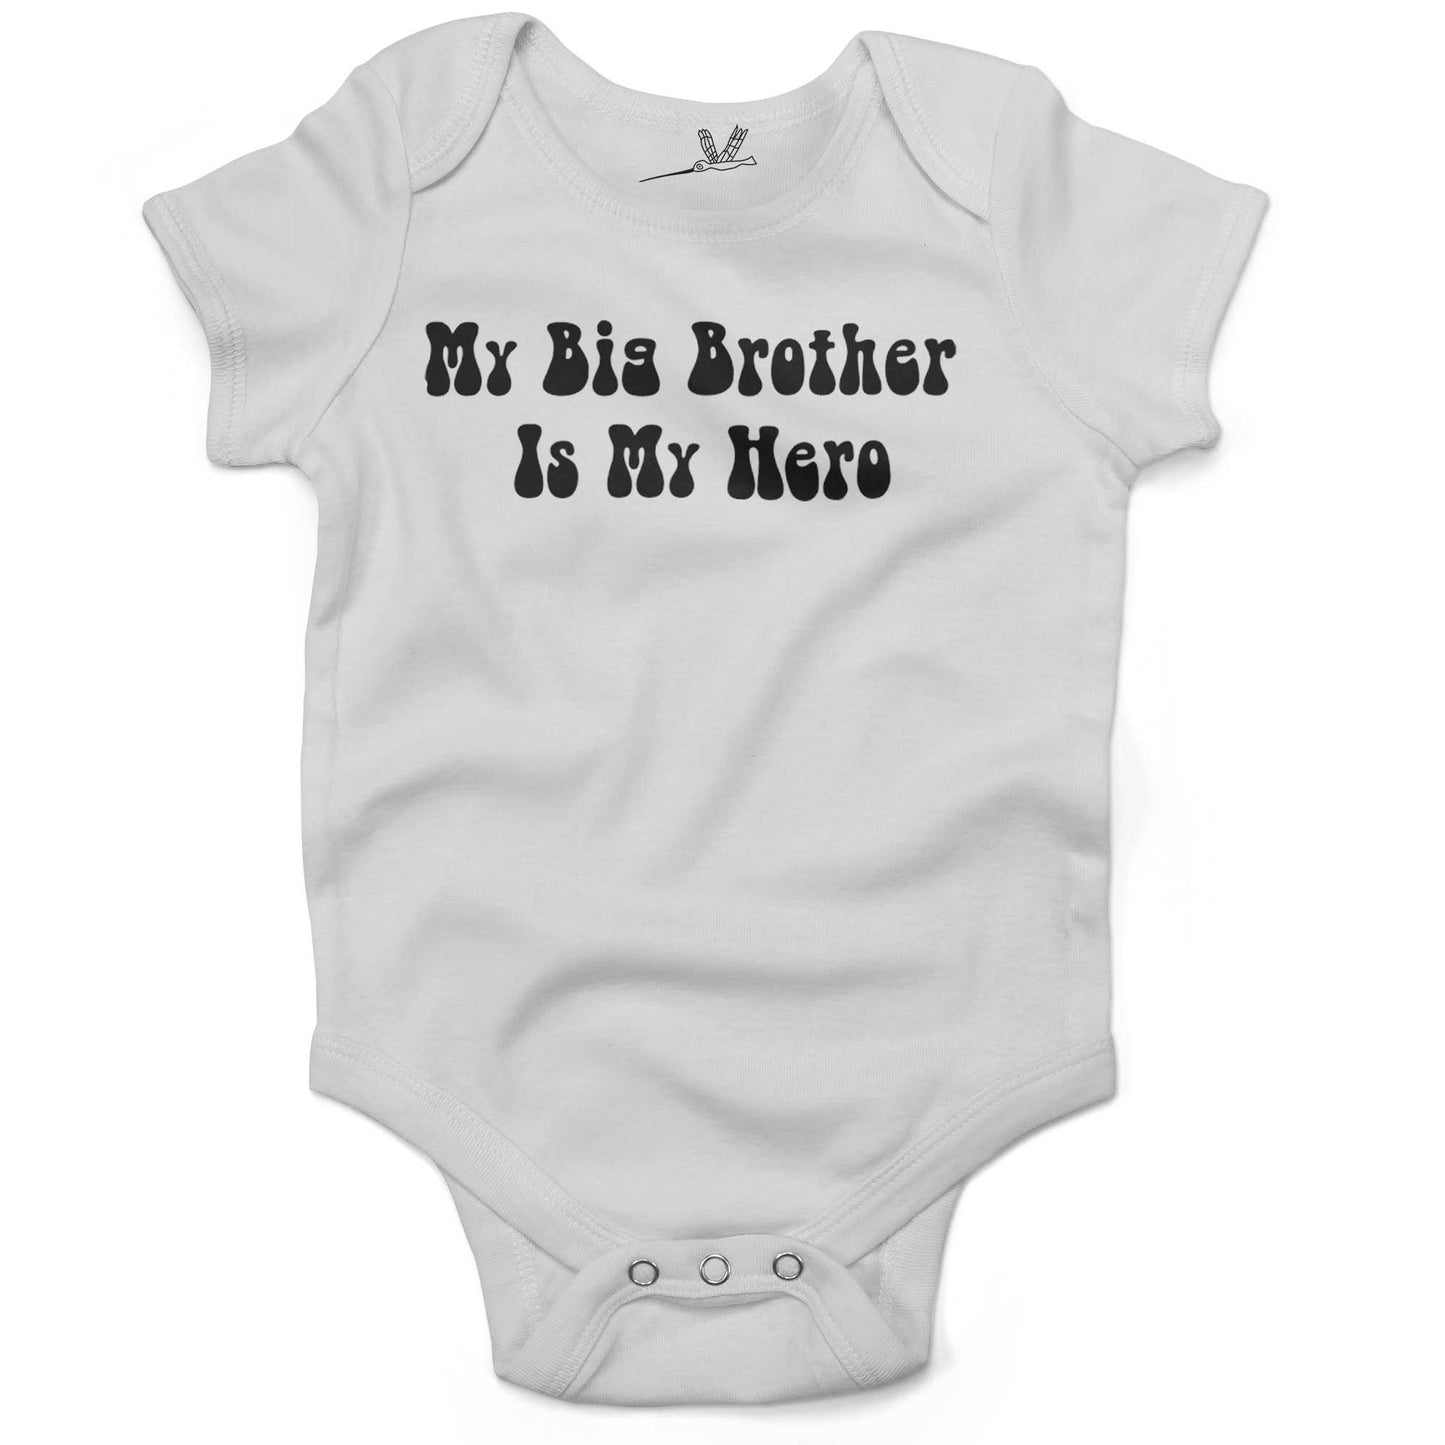 My Big Brother Is My Hero Infant Bodysuit or Raglan Tee-White-3-6 months